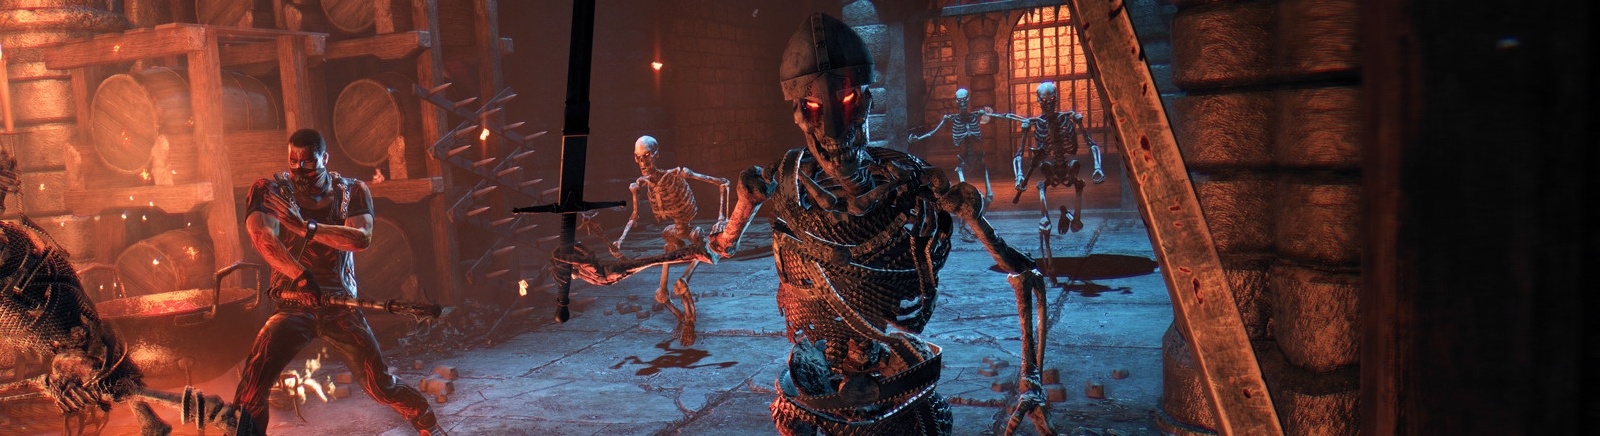 Дата выхода Dying Light: Hellraid  на PC, PS4 и Xbox One в России и во всем мире